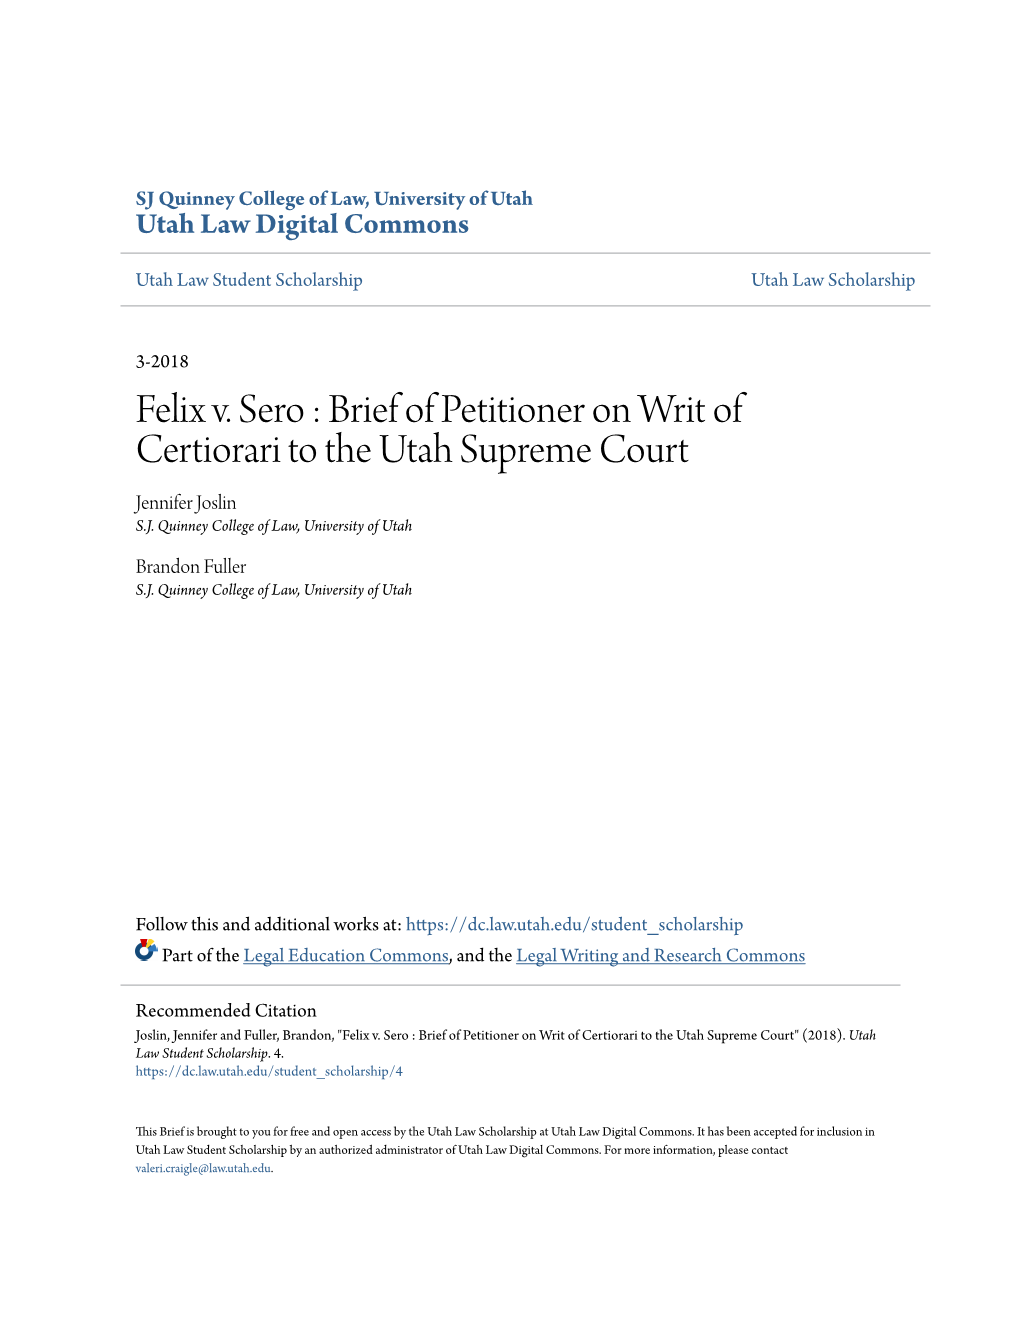 Brief of Petitioner on Writ of Certiorari to the Utah Supreme Court Jennifer Joslin S.J